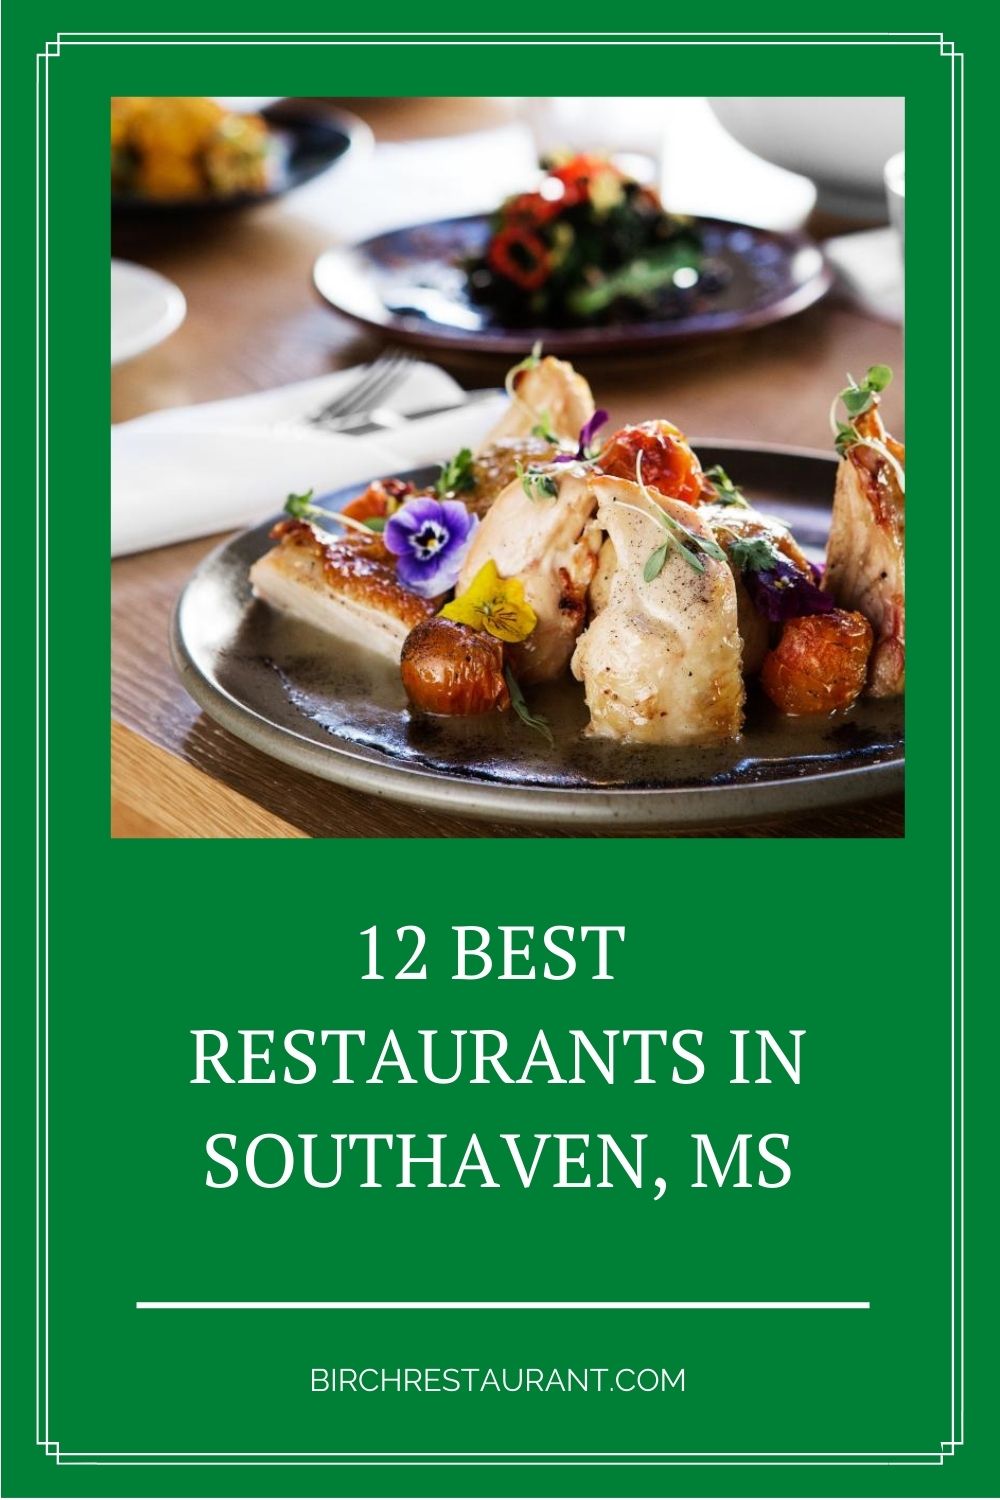 Best Restaurants in Southaven